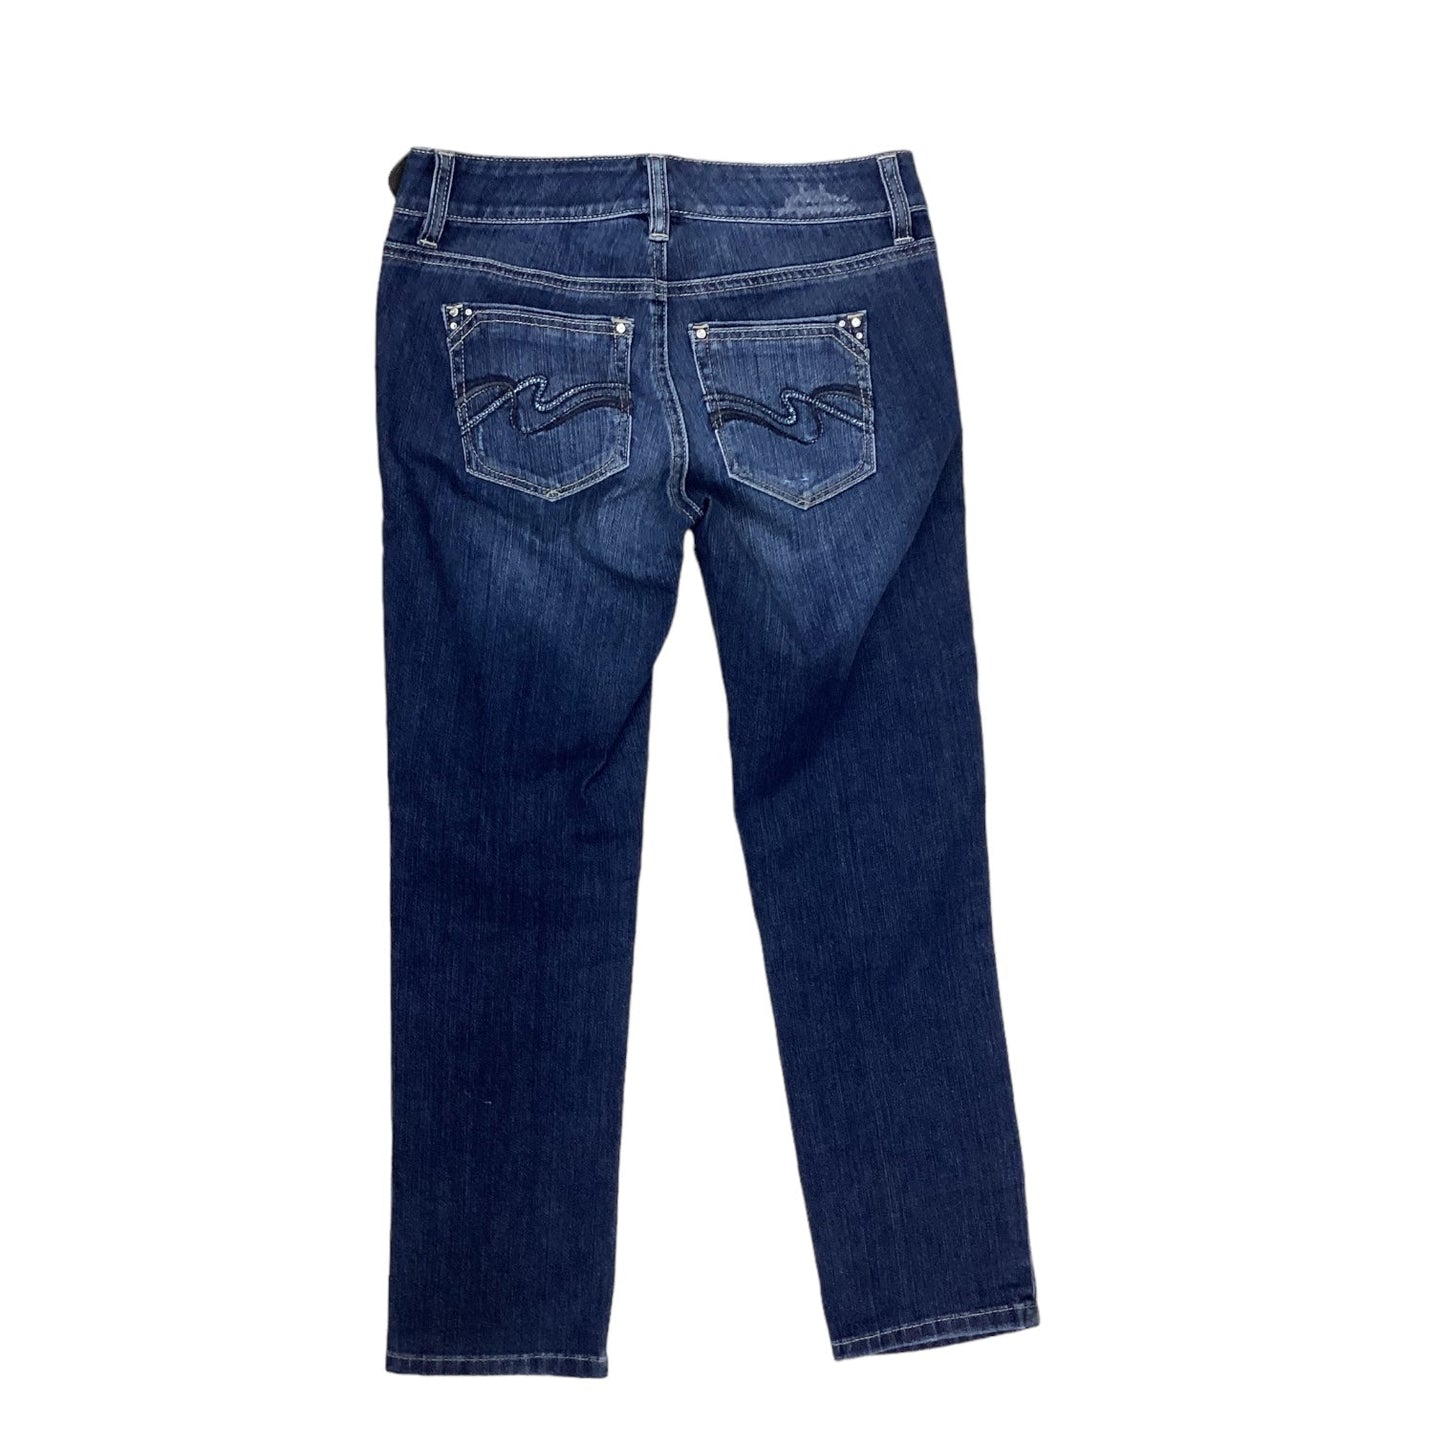 Jeans Designer By White House Black Market  Size: 00